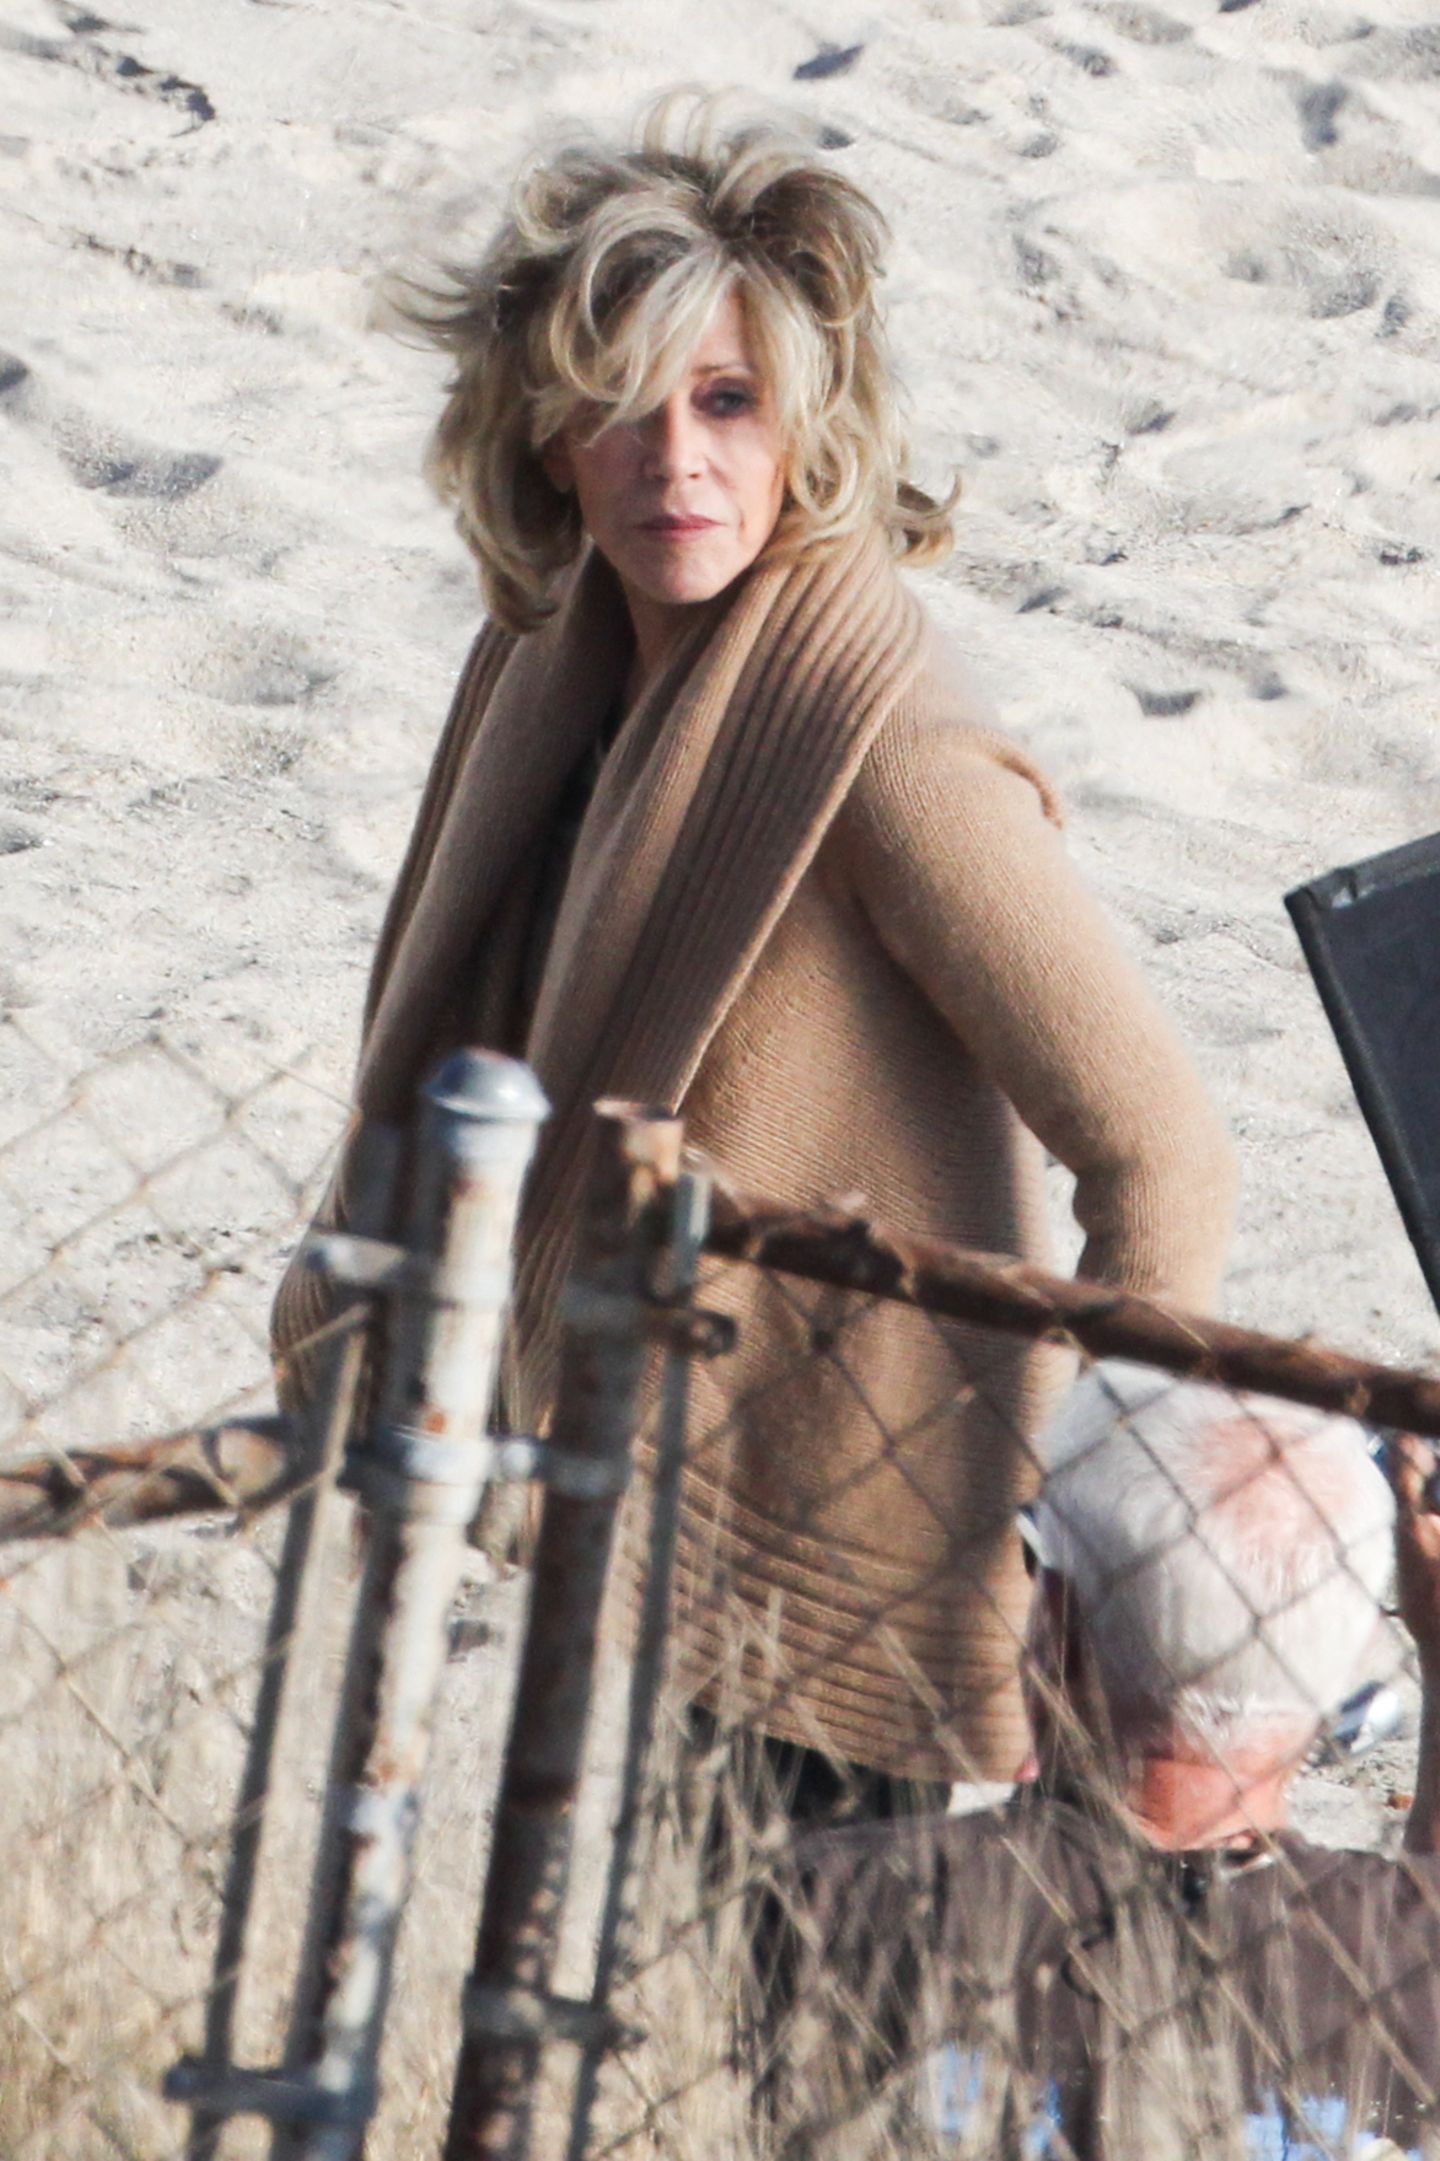 8. August 2014: Am Strand von Malibu dreht Jane Fonda "Grace and Frankie".